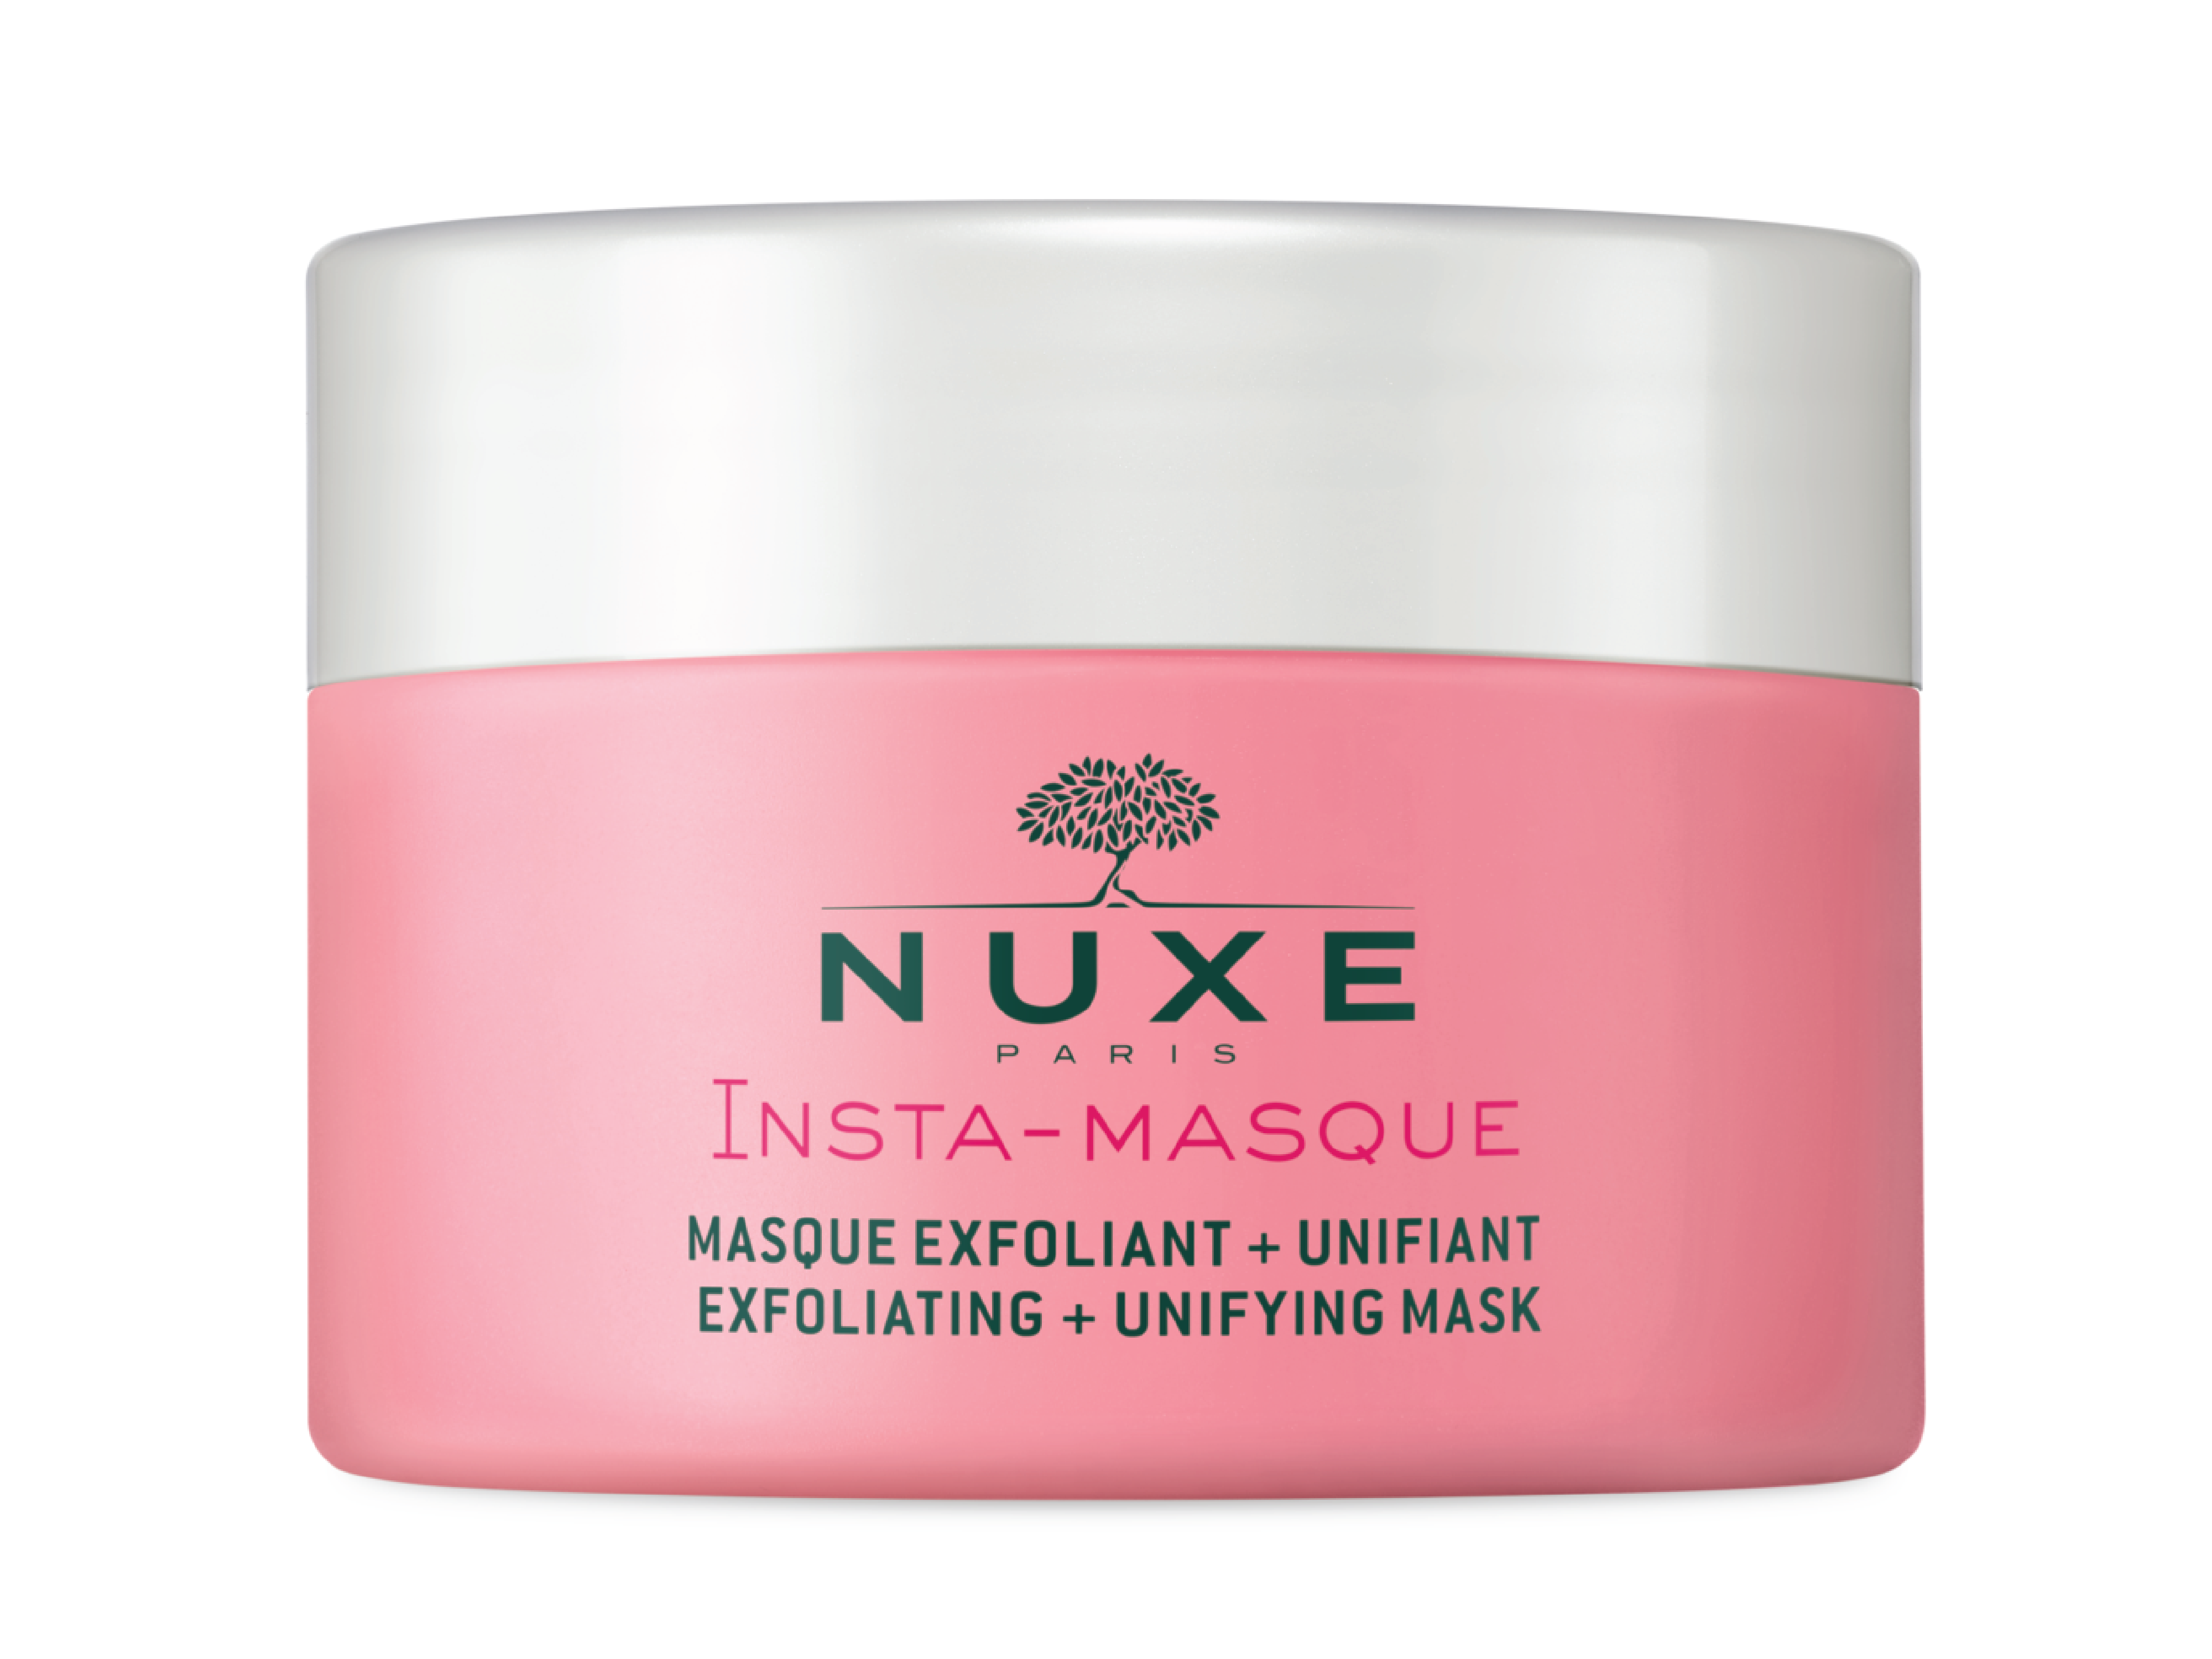 NUXE Insta-Masque Exfoliating Mask, 50 ml